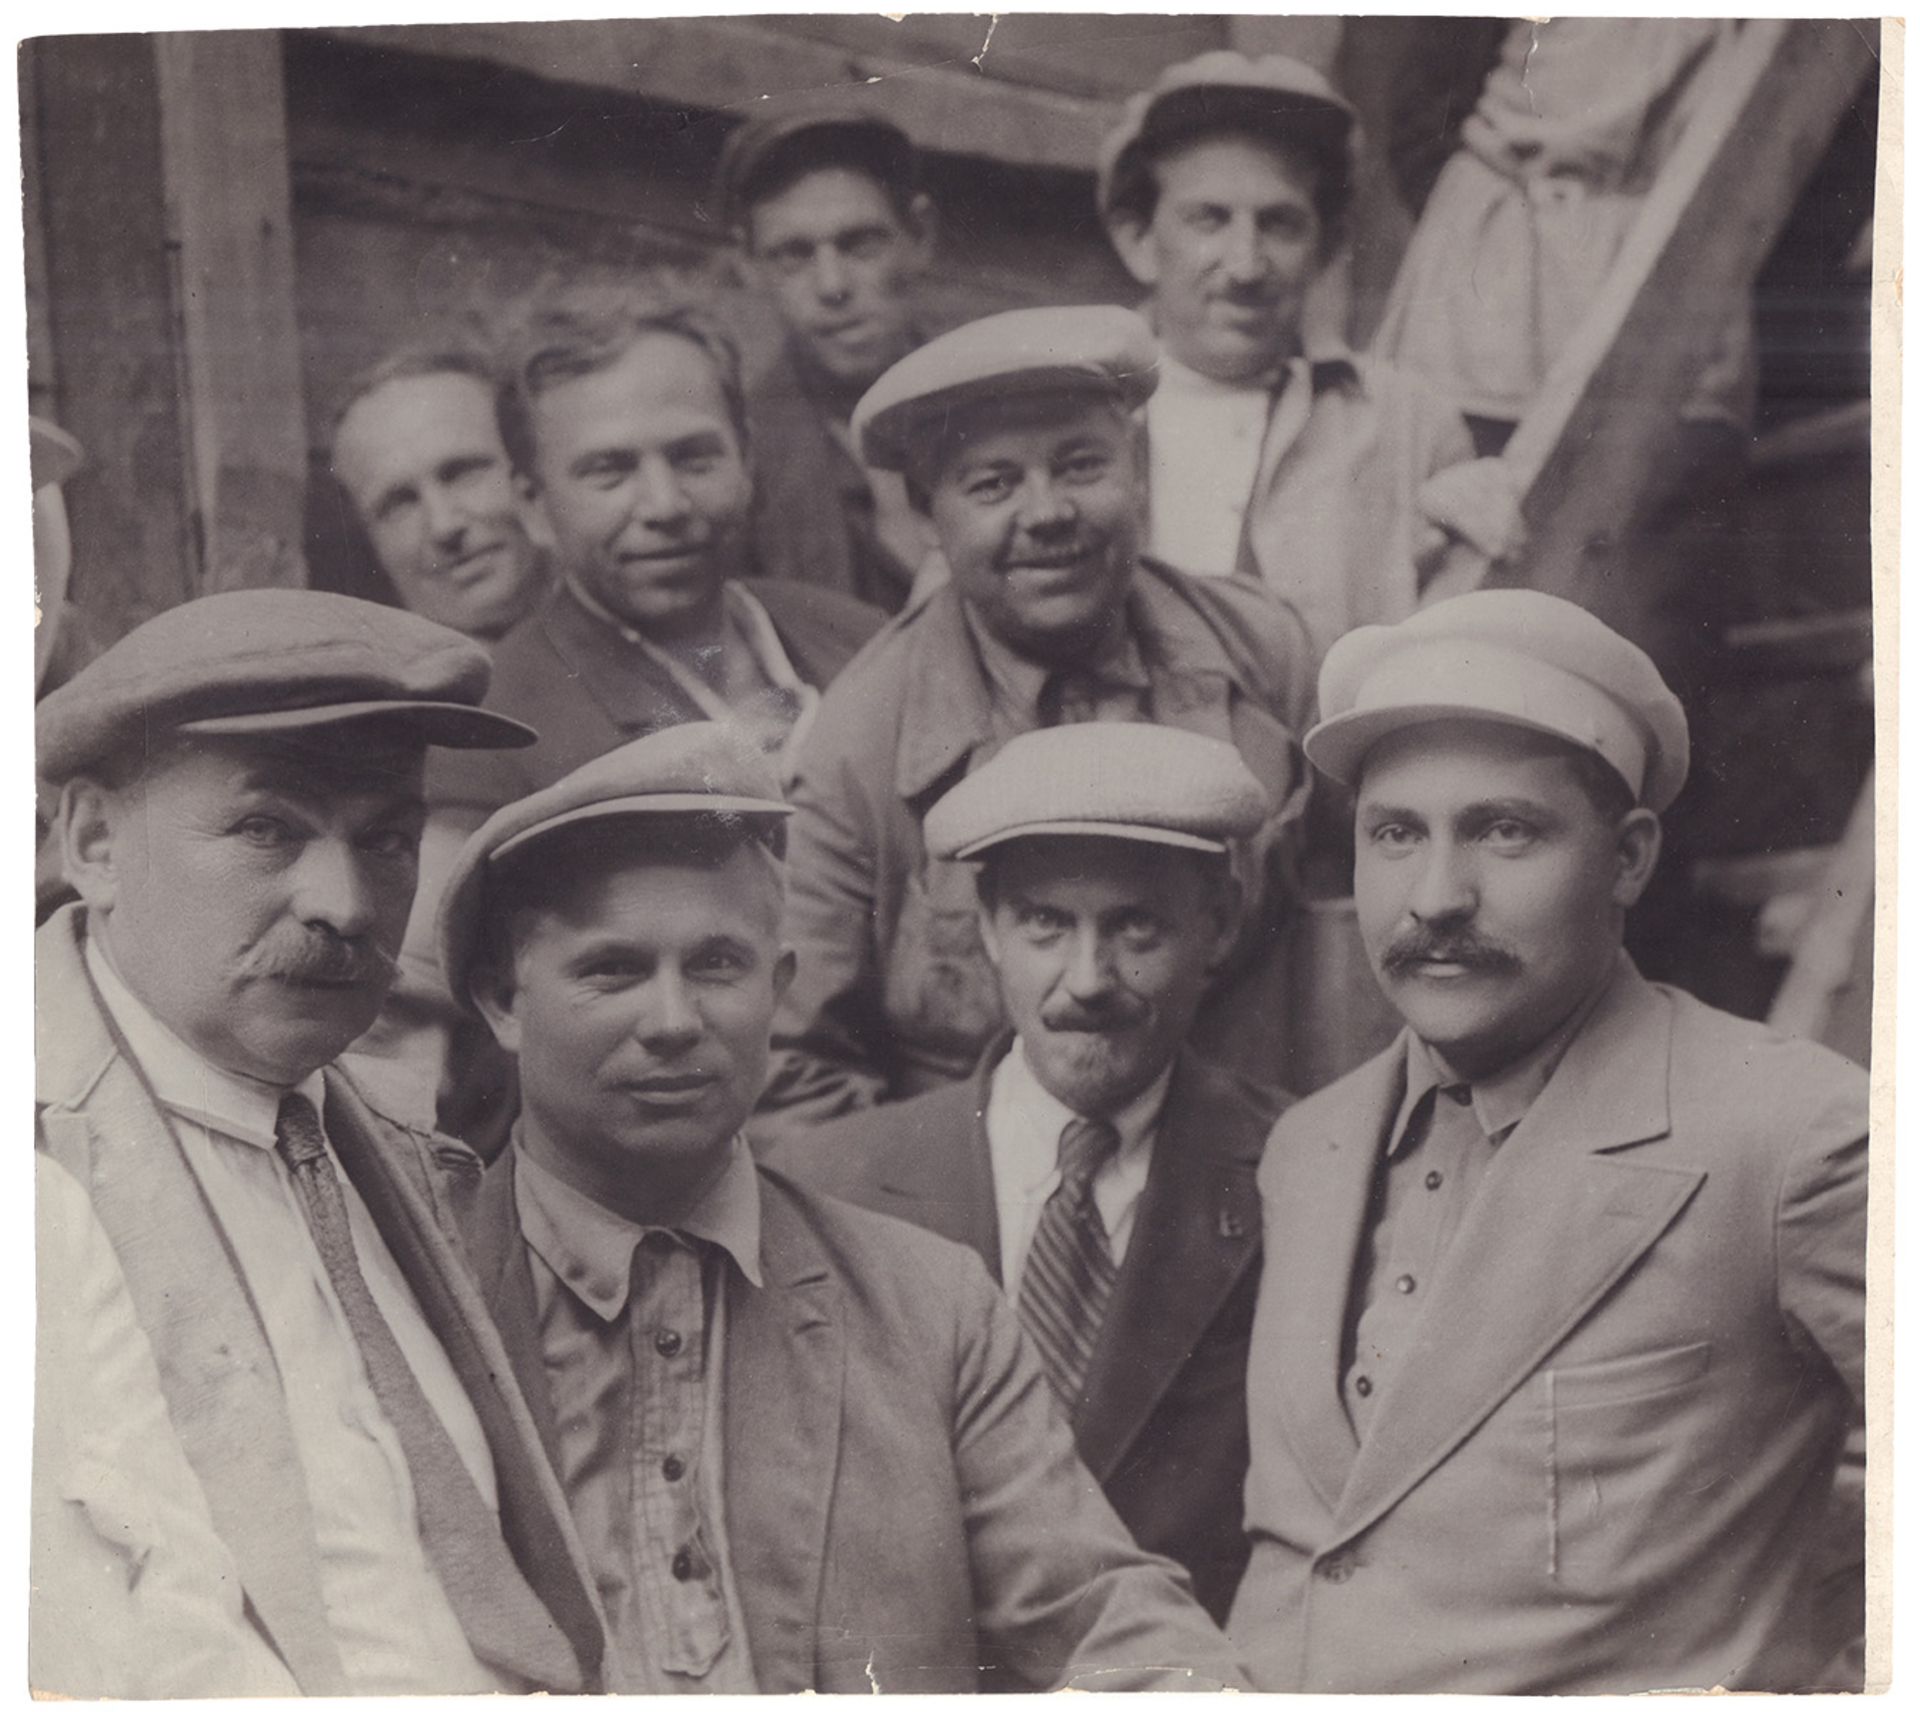 [Soviet]. Photo "N.S. Khrushchev, L.M. Kaganovich, civil engineer P.P. Rottert, N.A. Bulganin and th